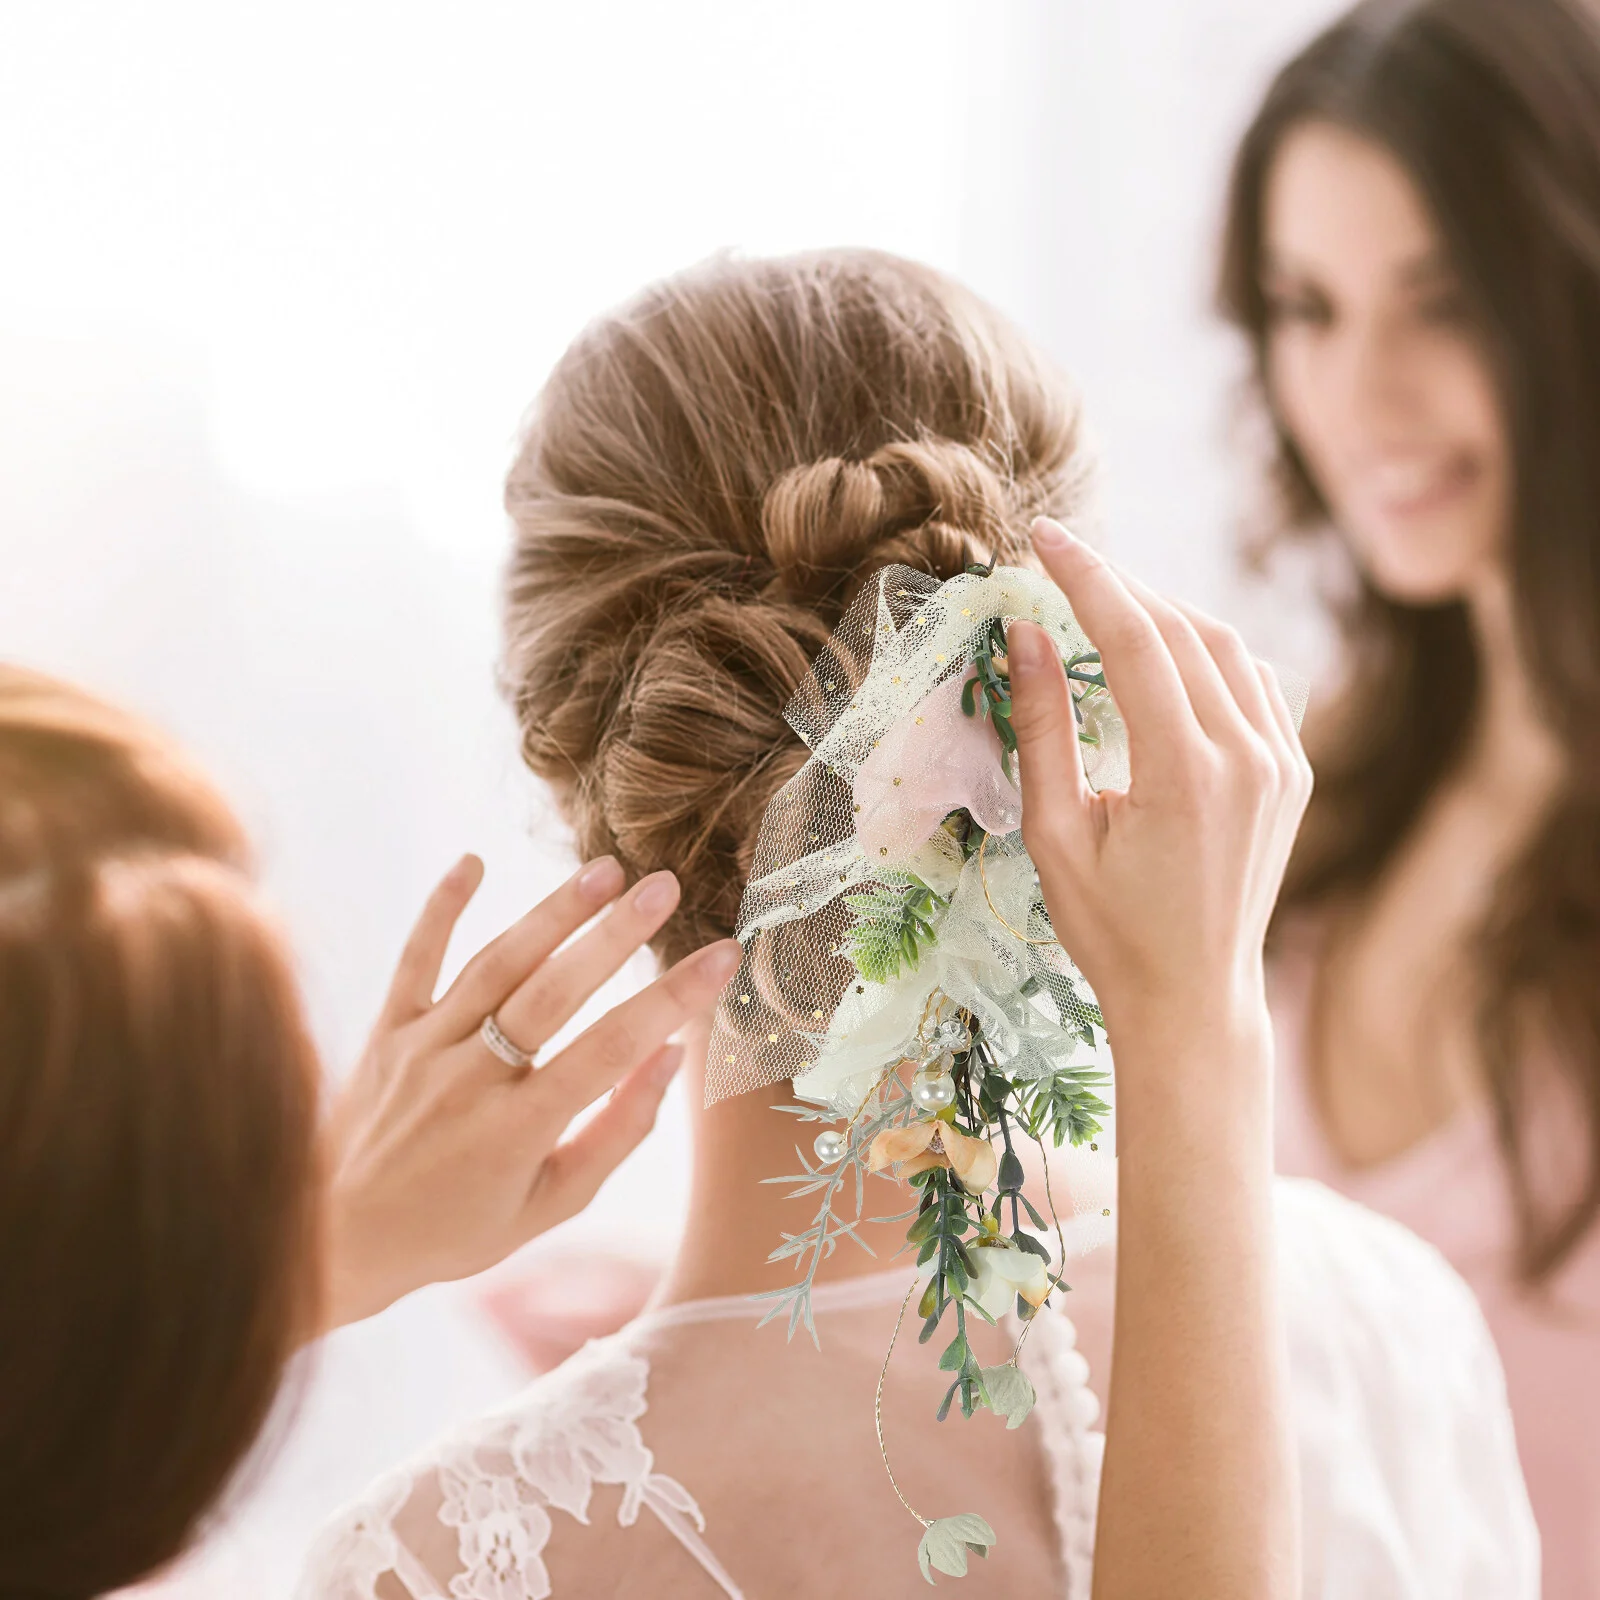 

2 Pcs Decorate Flower Hair Vine For Women Bride Floral Garlands Wedding Bridal Headpieces Vines Brides Accessories